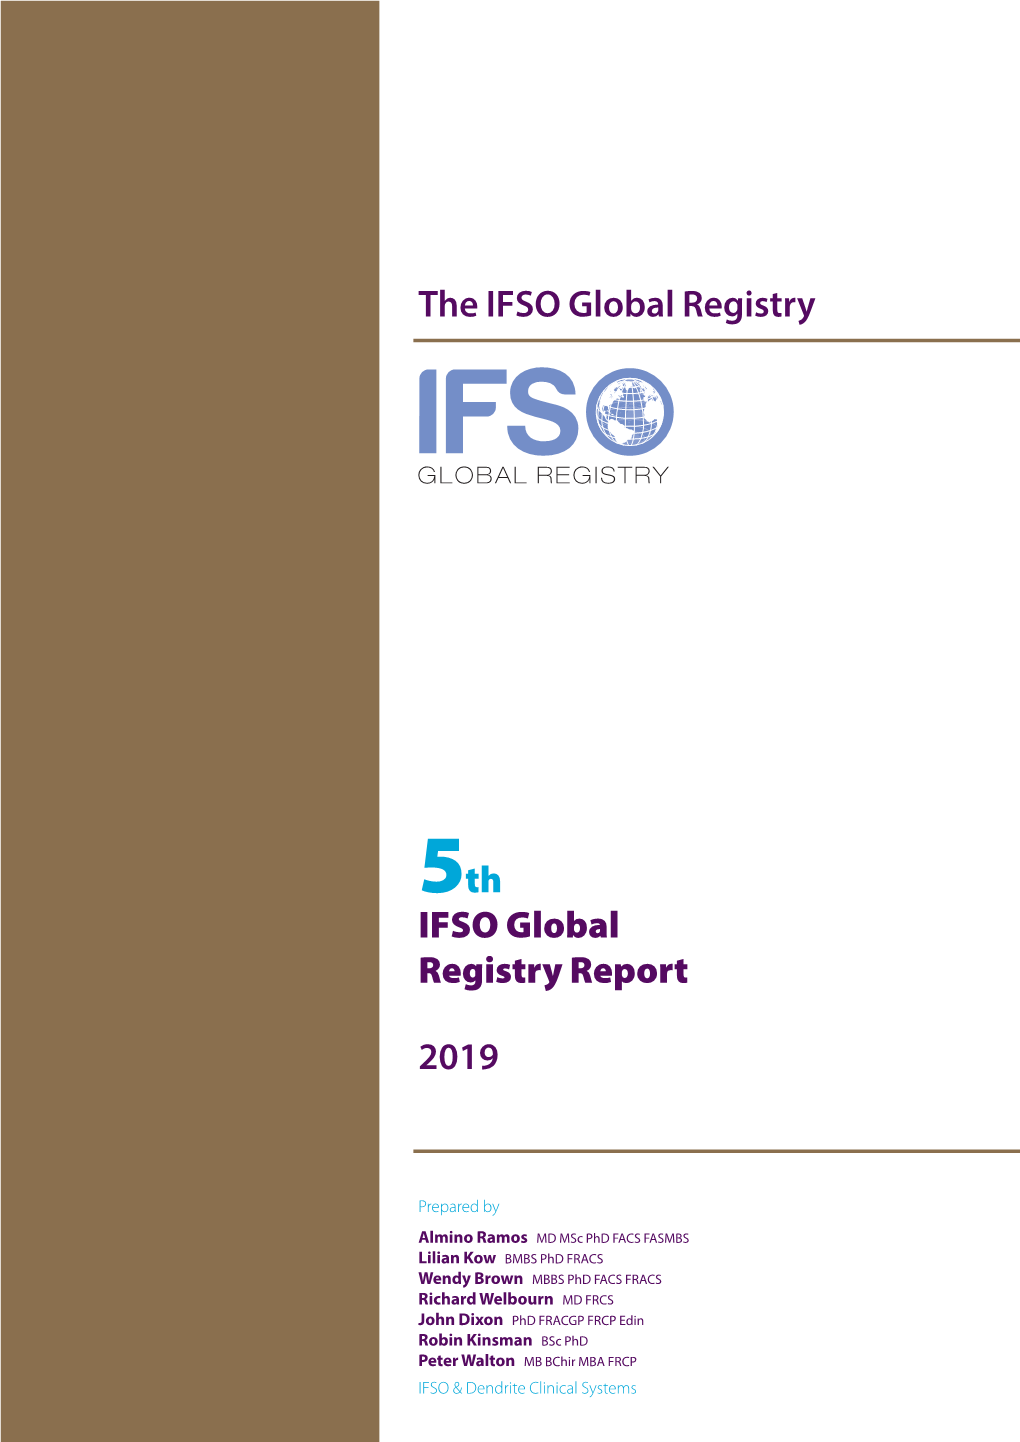 IFSO Global Registry Report